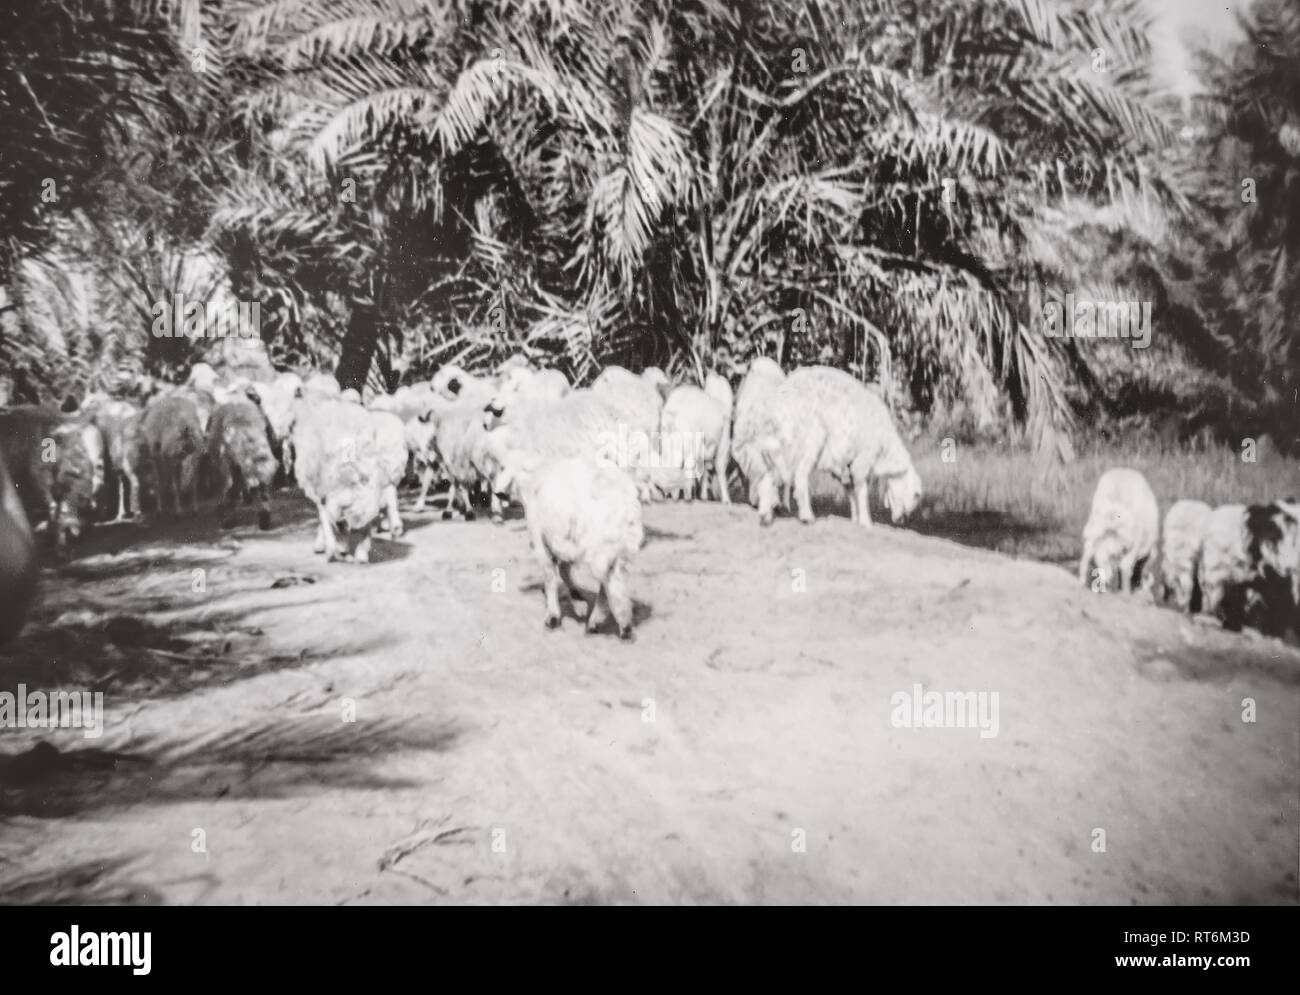 HIstorical photograph of sheep gathering near water near a well with precious water and many palm trees, at Al-Hofuf (Hofuf), Al-Ahsa, Saudi Arabia (1968). Stock Photo